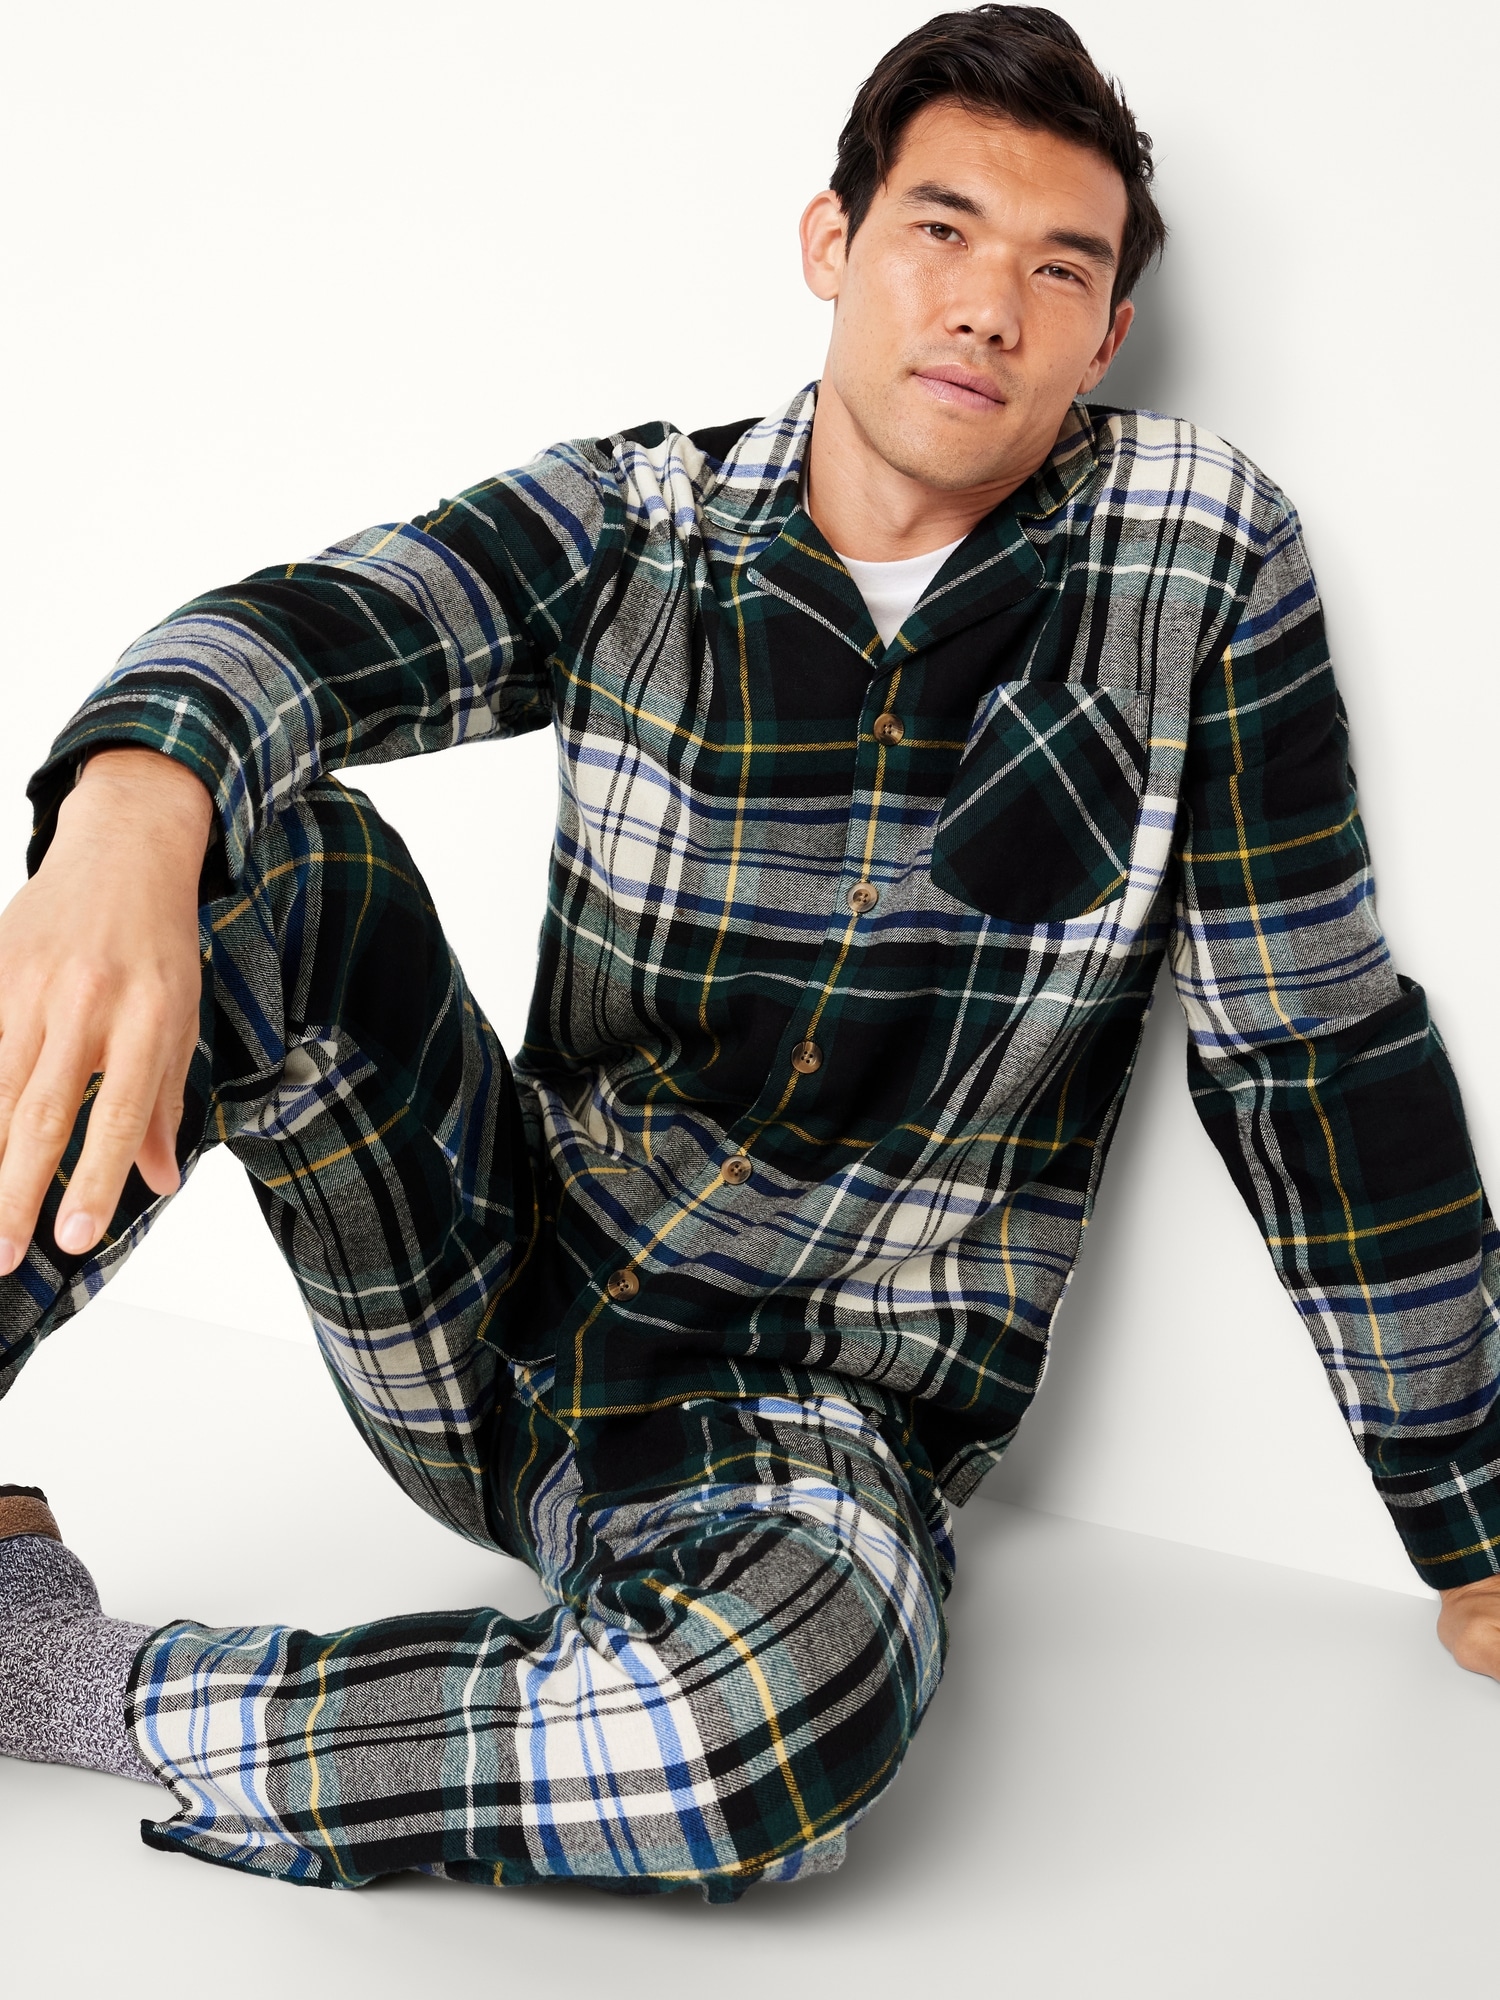 Matching Plaid Flannel Pajama Set